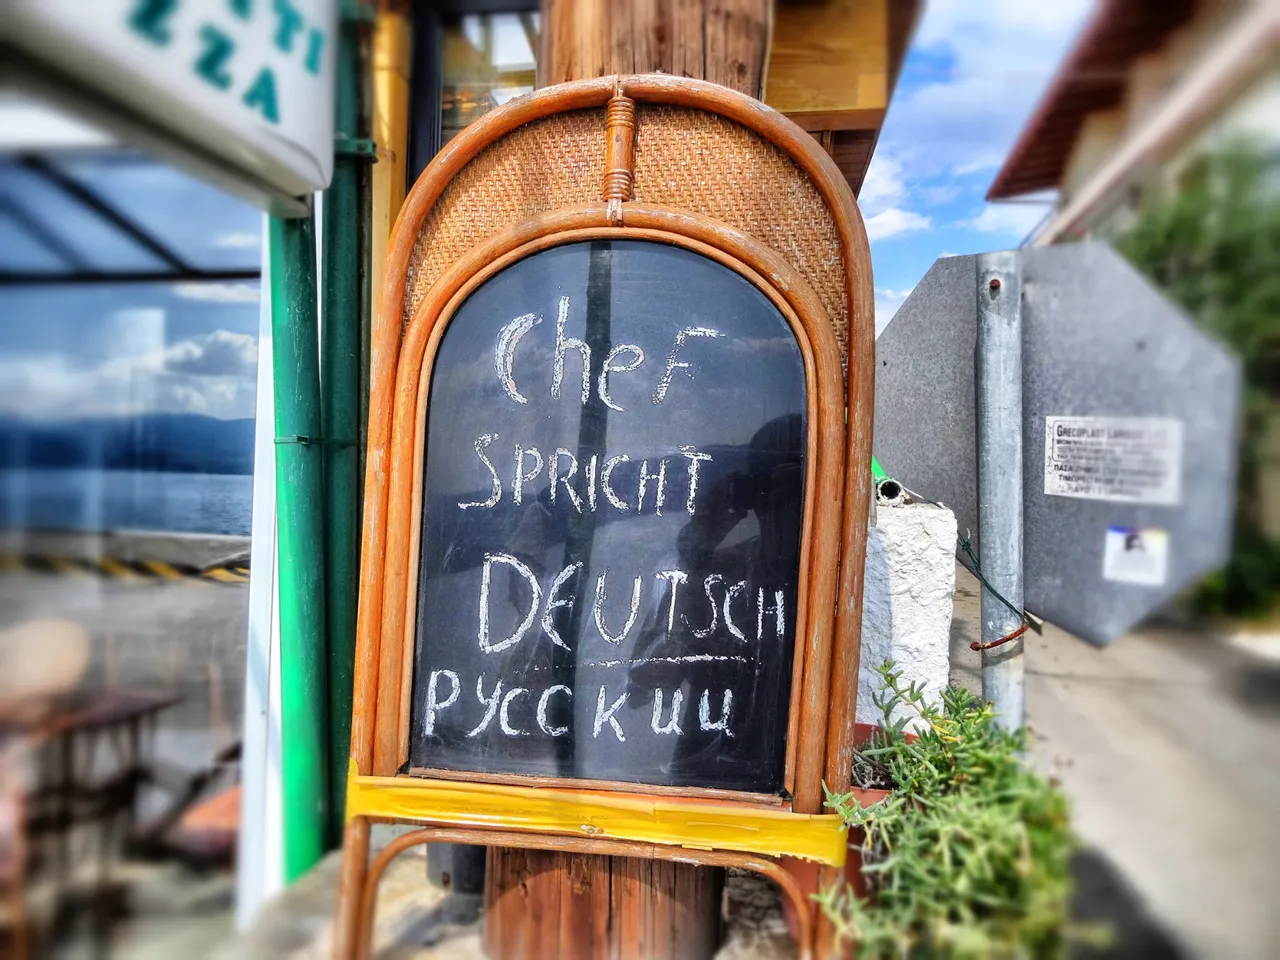 The Chef is speaking german